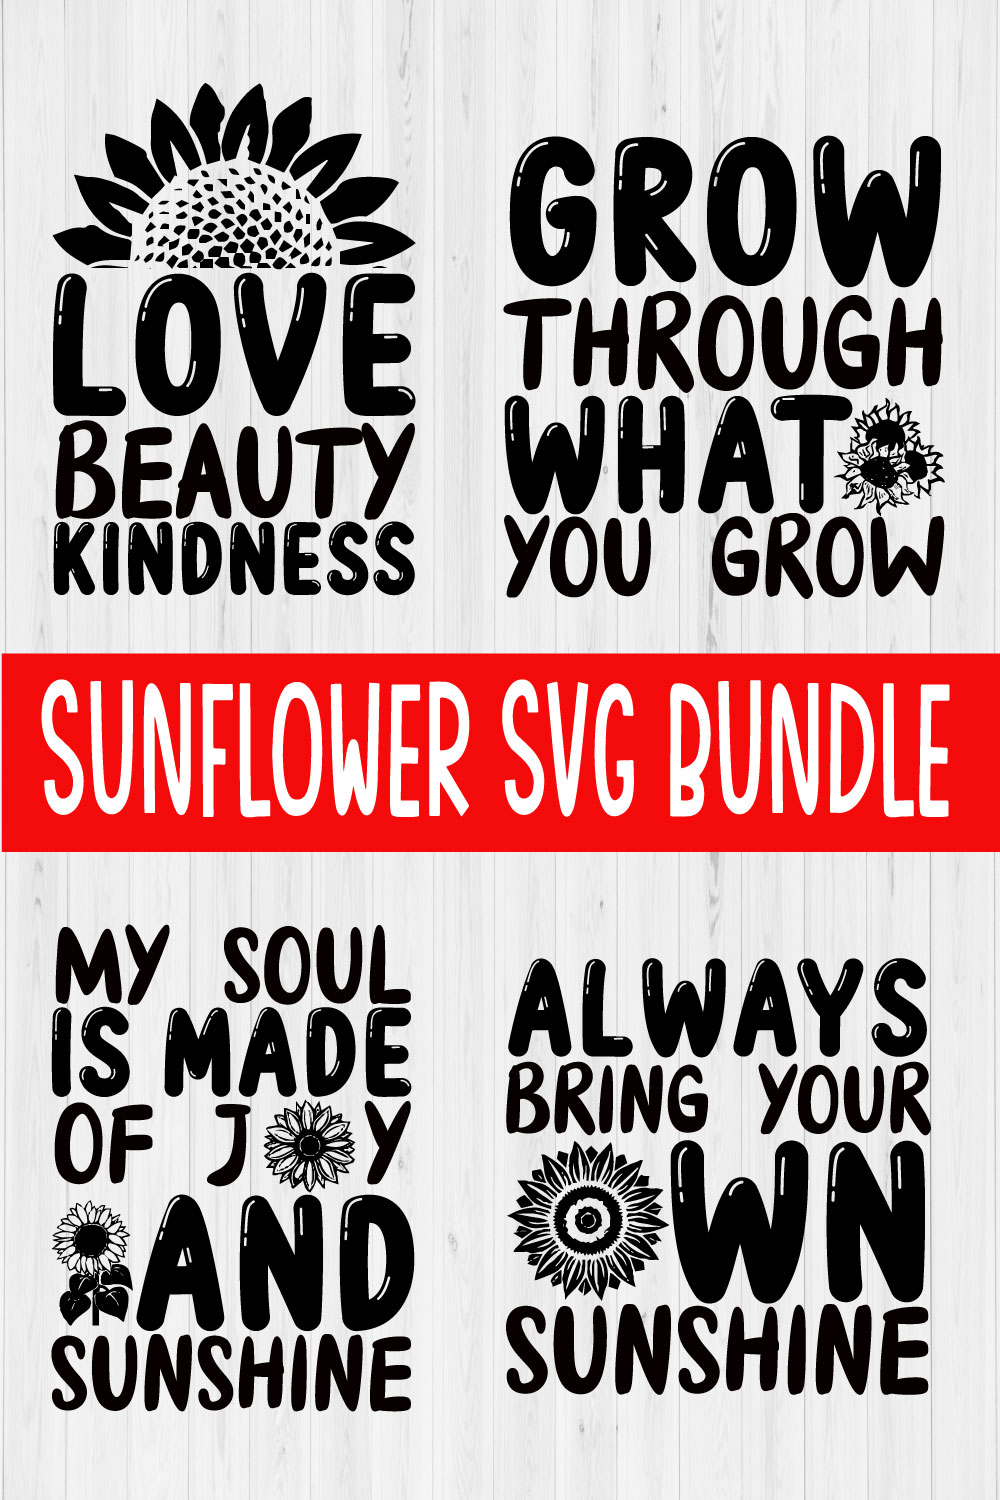 Sunflower Svg Design Bundle Vol2 pinterest preview image.